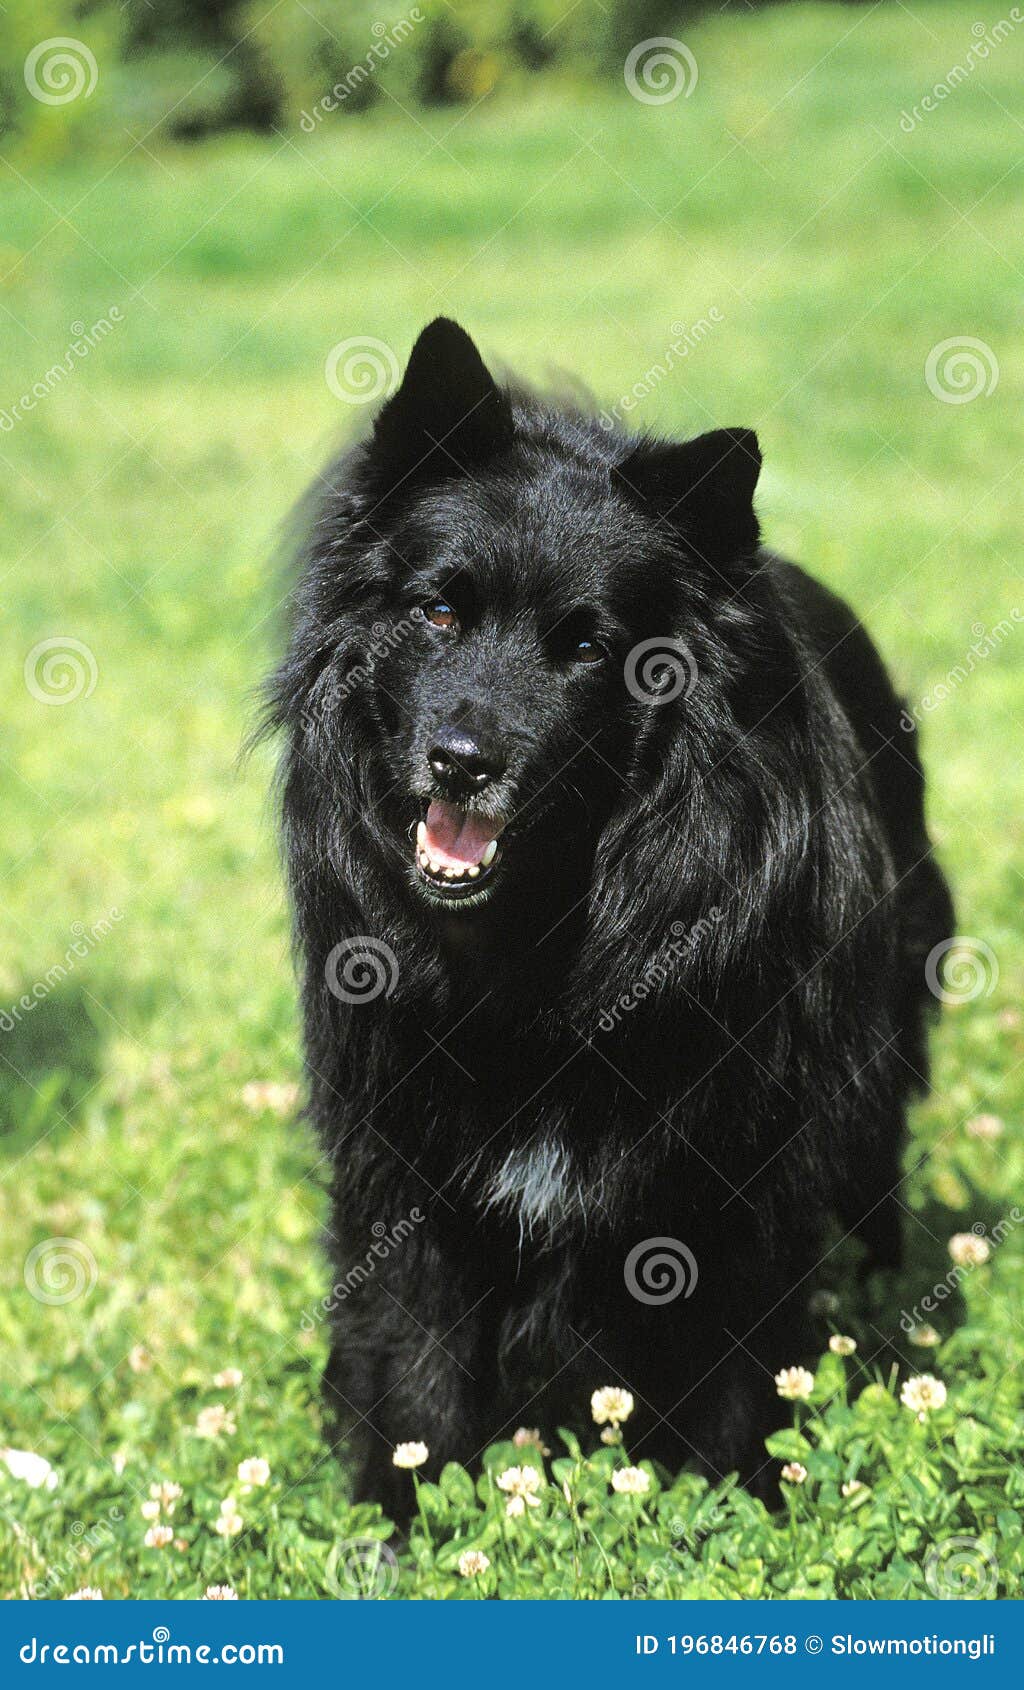 swedish lapphund, dog standing on grass